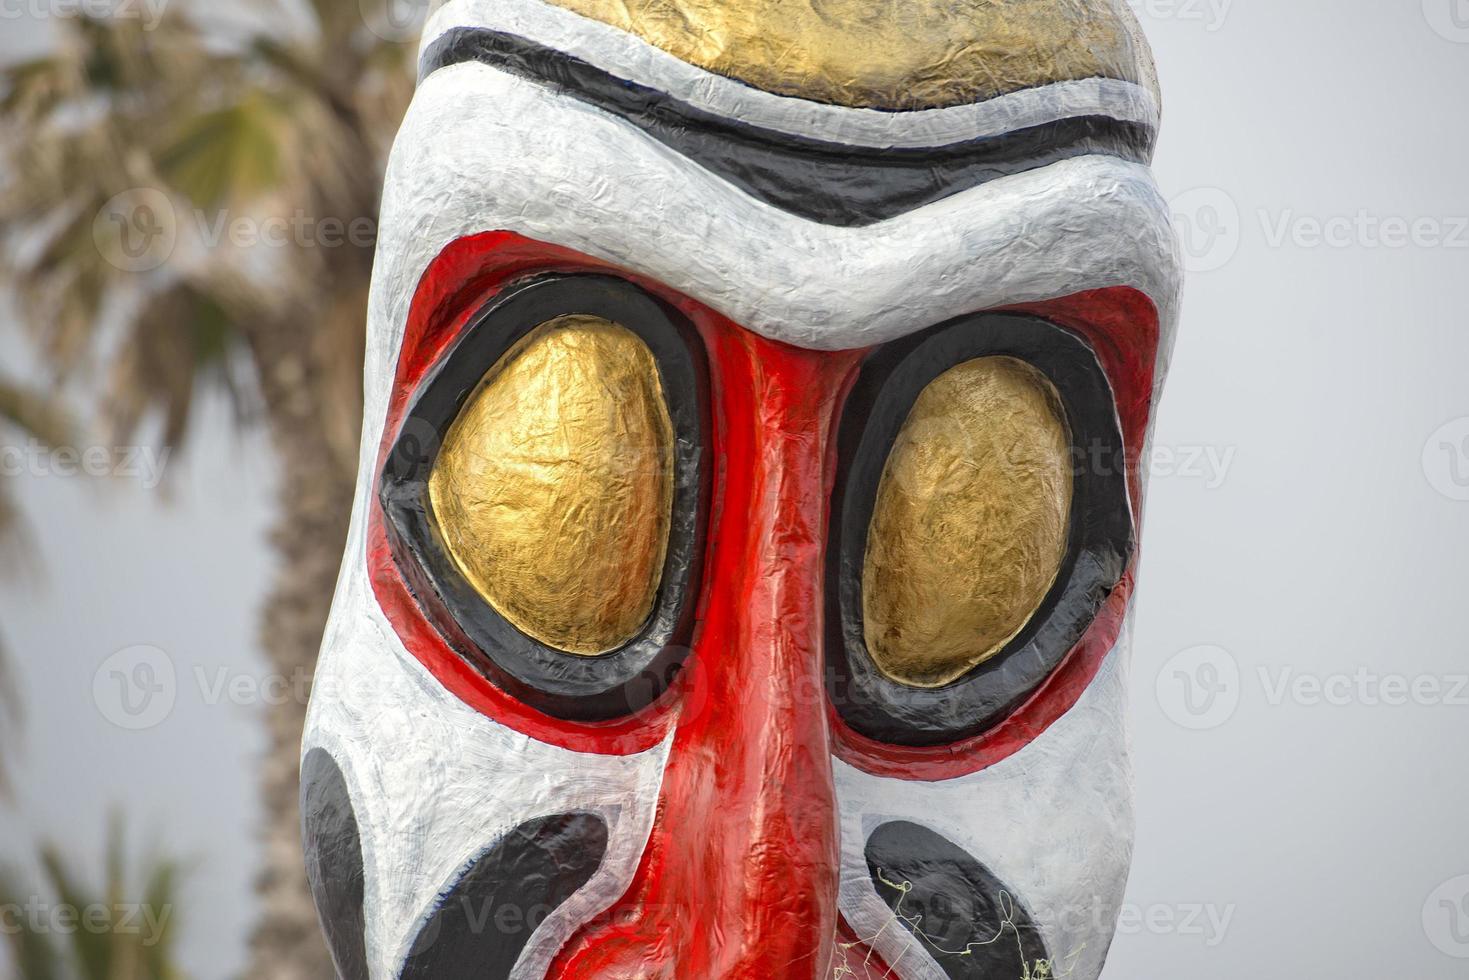 carnaval optocht wagon detail Afrikaanse tribal masker foto